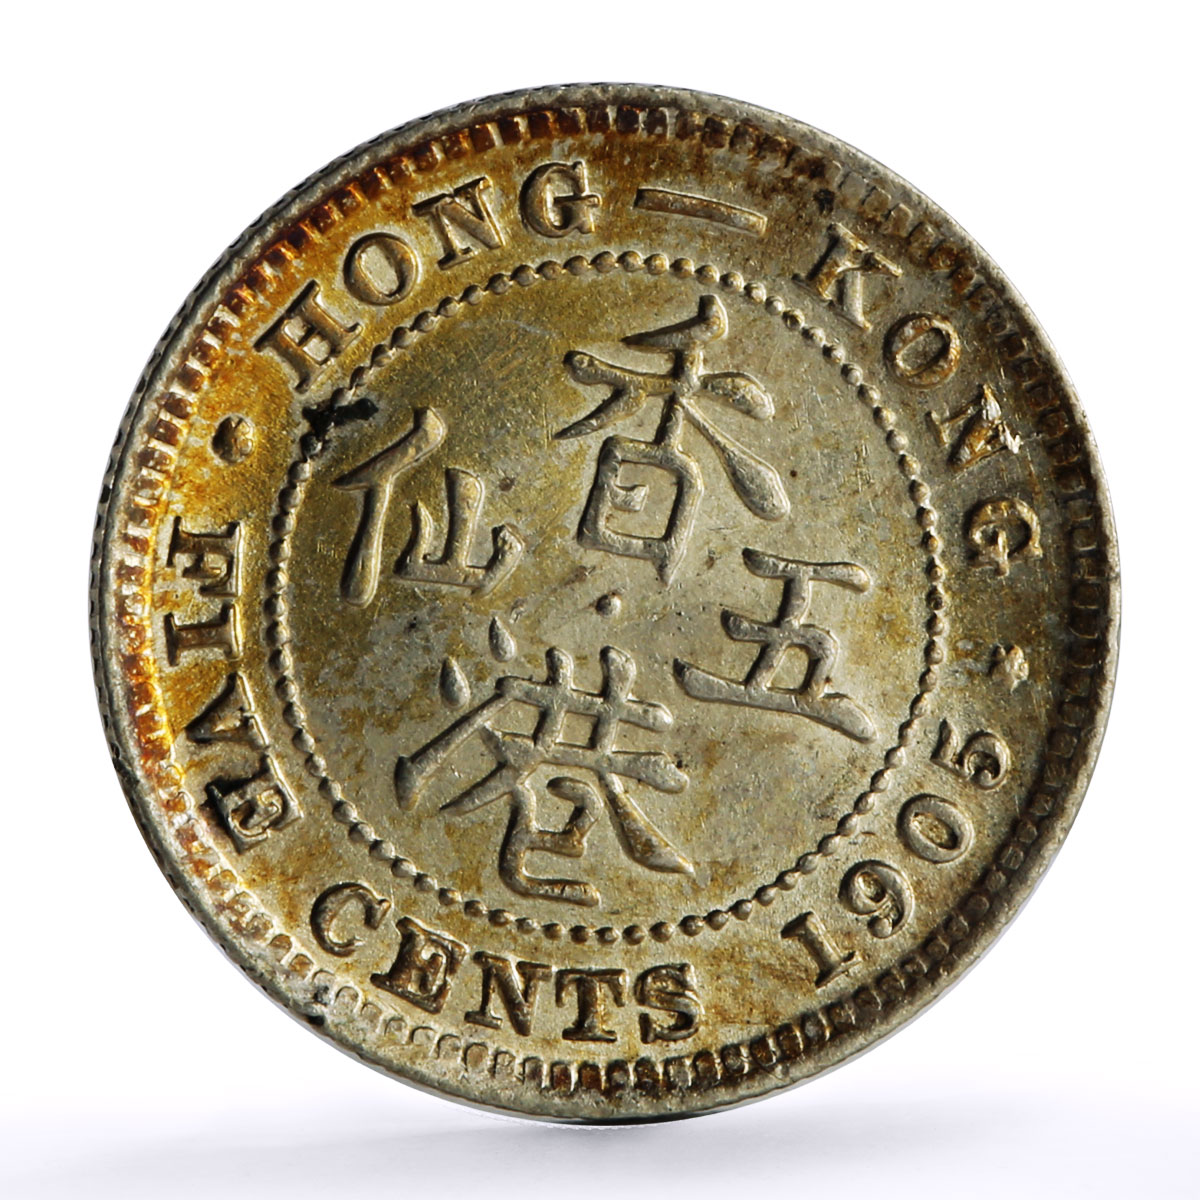 Hong Kong 5 cents King Edward VII Coinage Coat of Arms KM-12 silver coin 1905